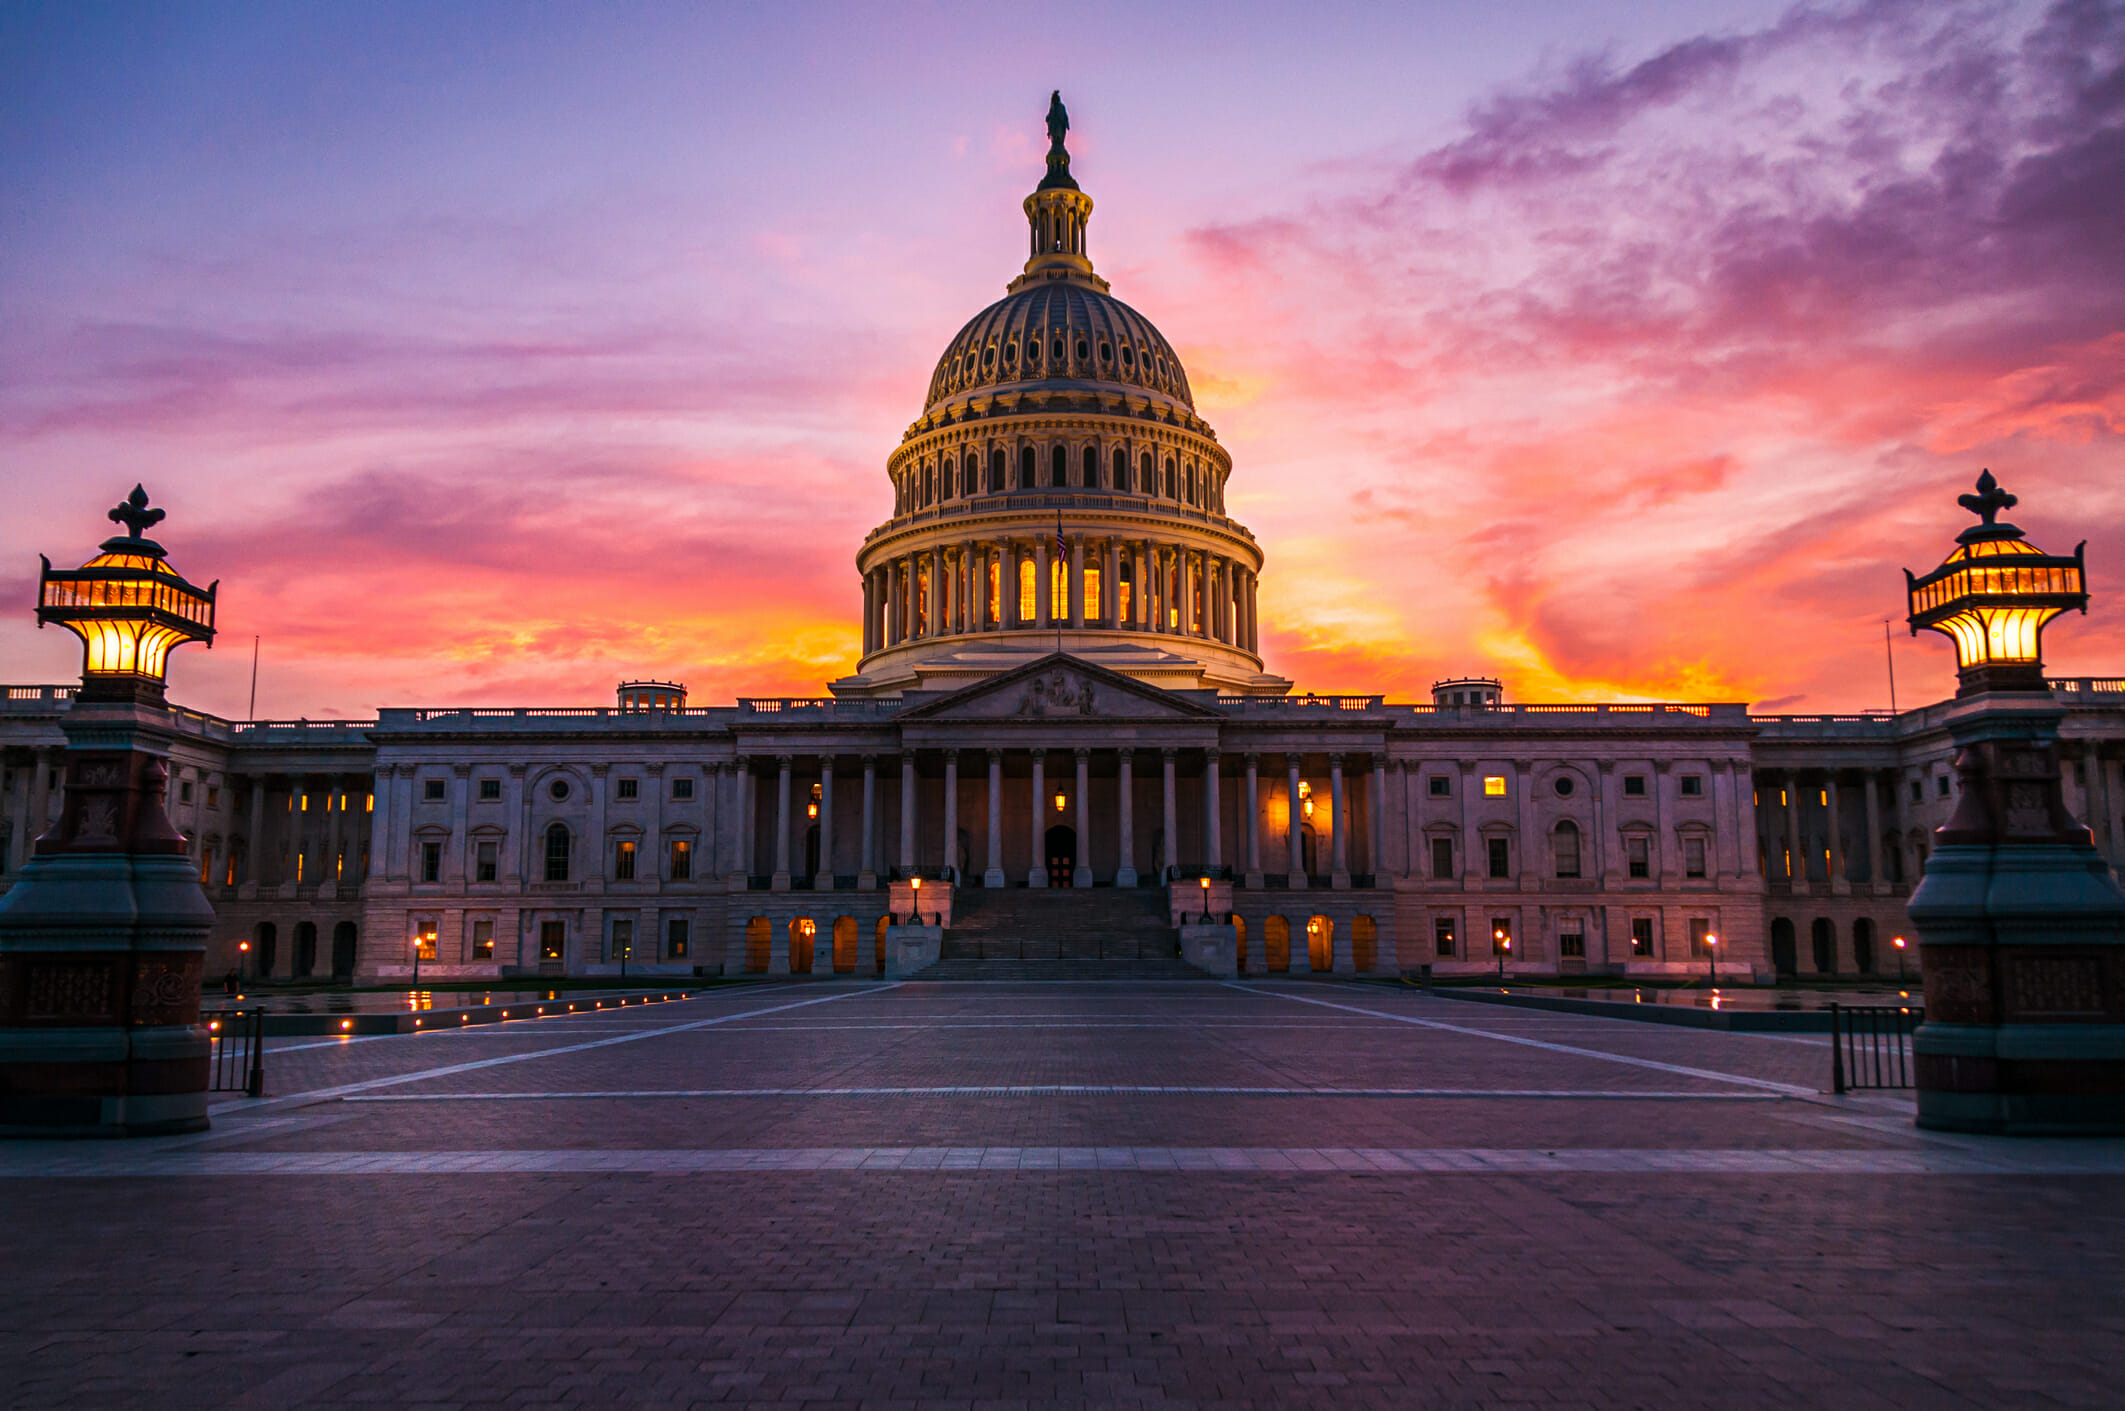 The capital dome illuminated after dark in Washington DC.